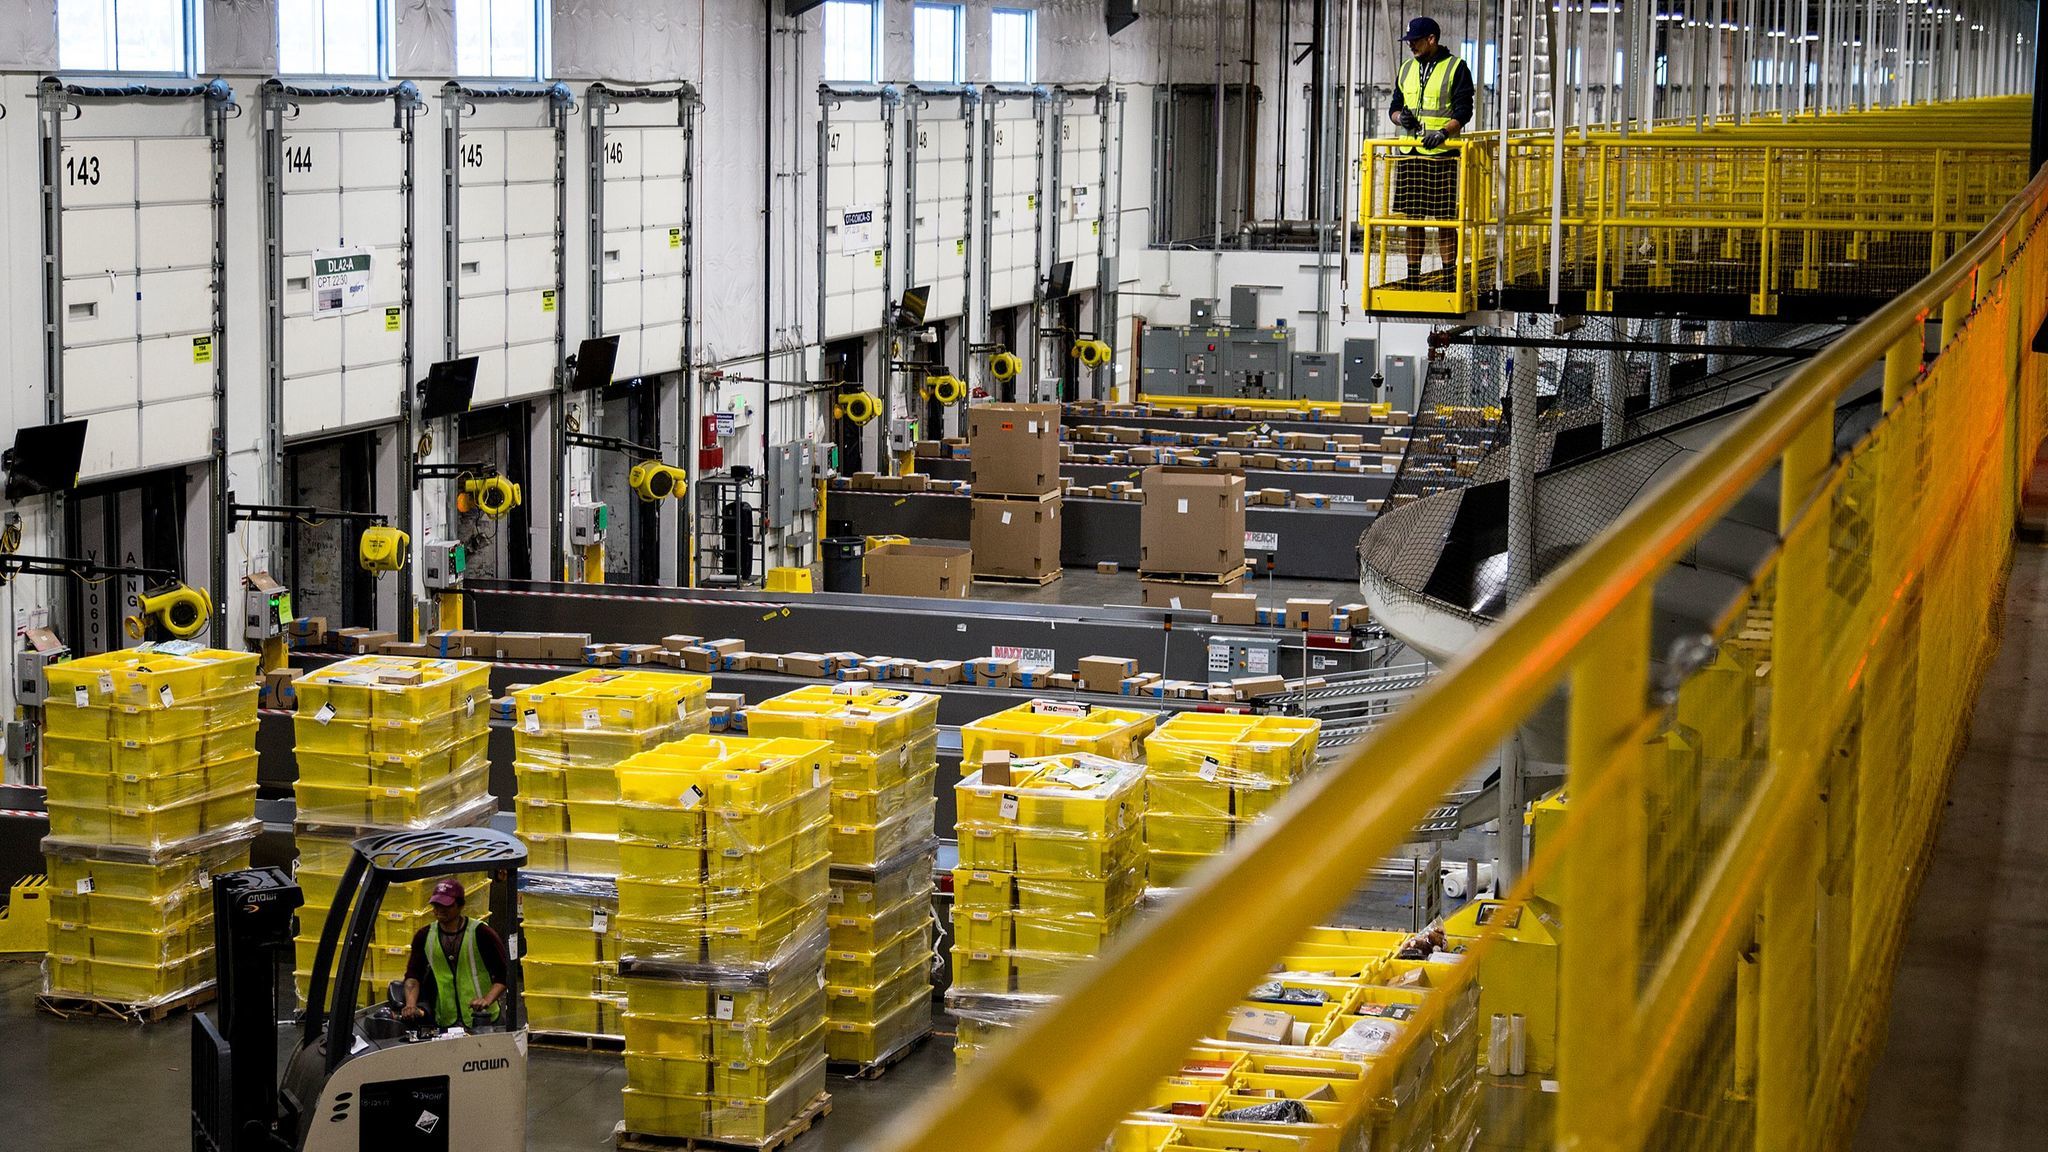 Packages move along a conveyor belt at the Amazon Fulfillment Center in San Bernardino